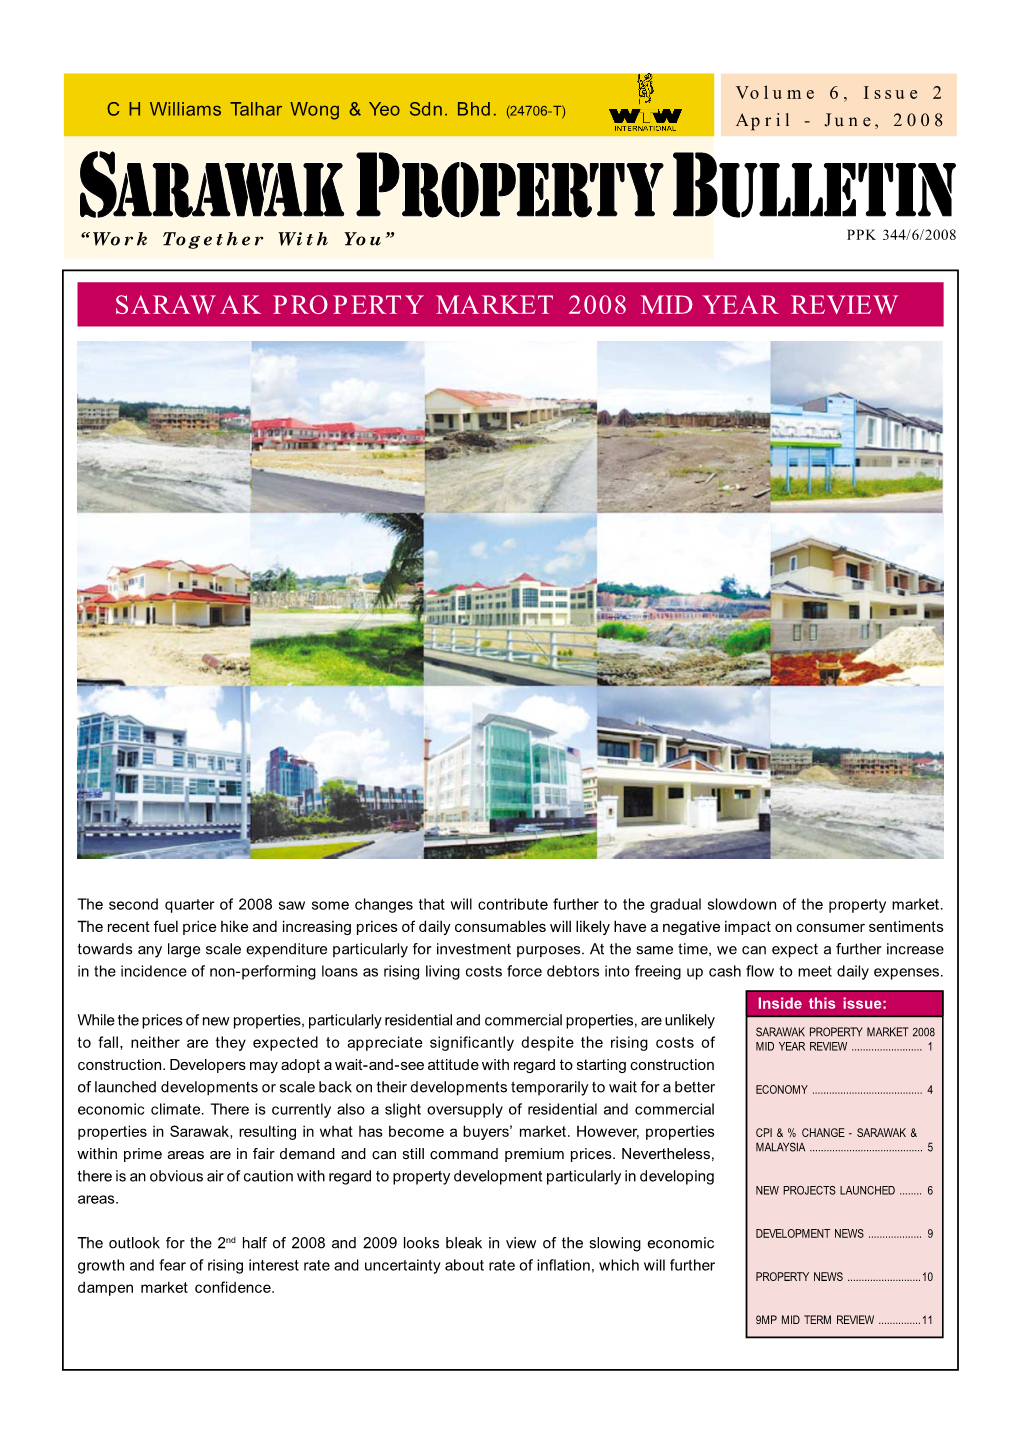 Sarawak Property Market 2008 Mid Year Review